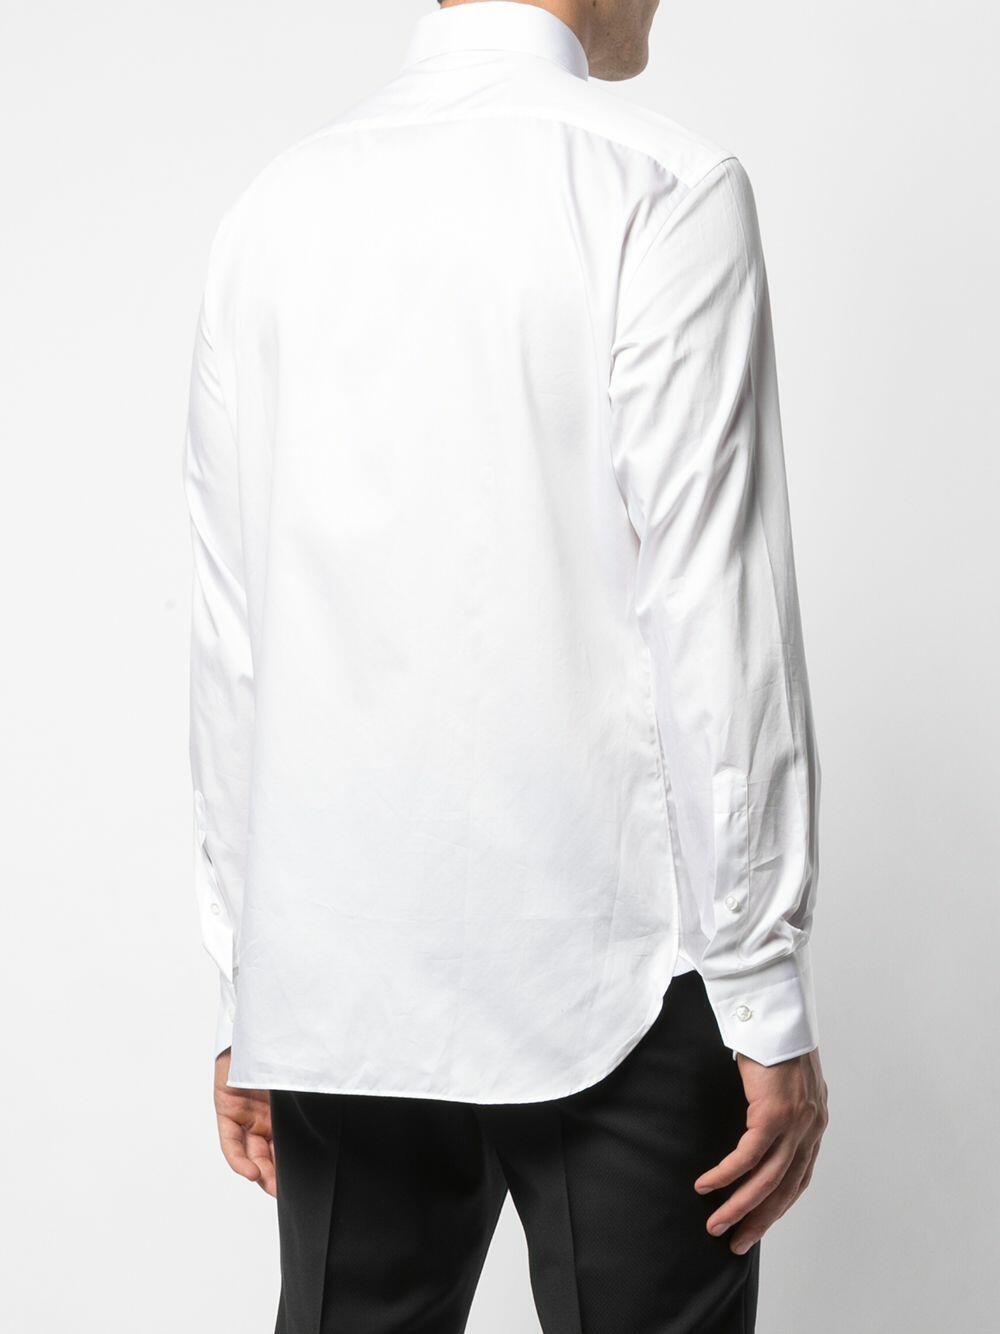 ZEGNA White Button Shirt